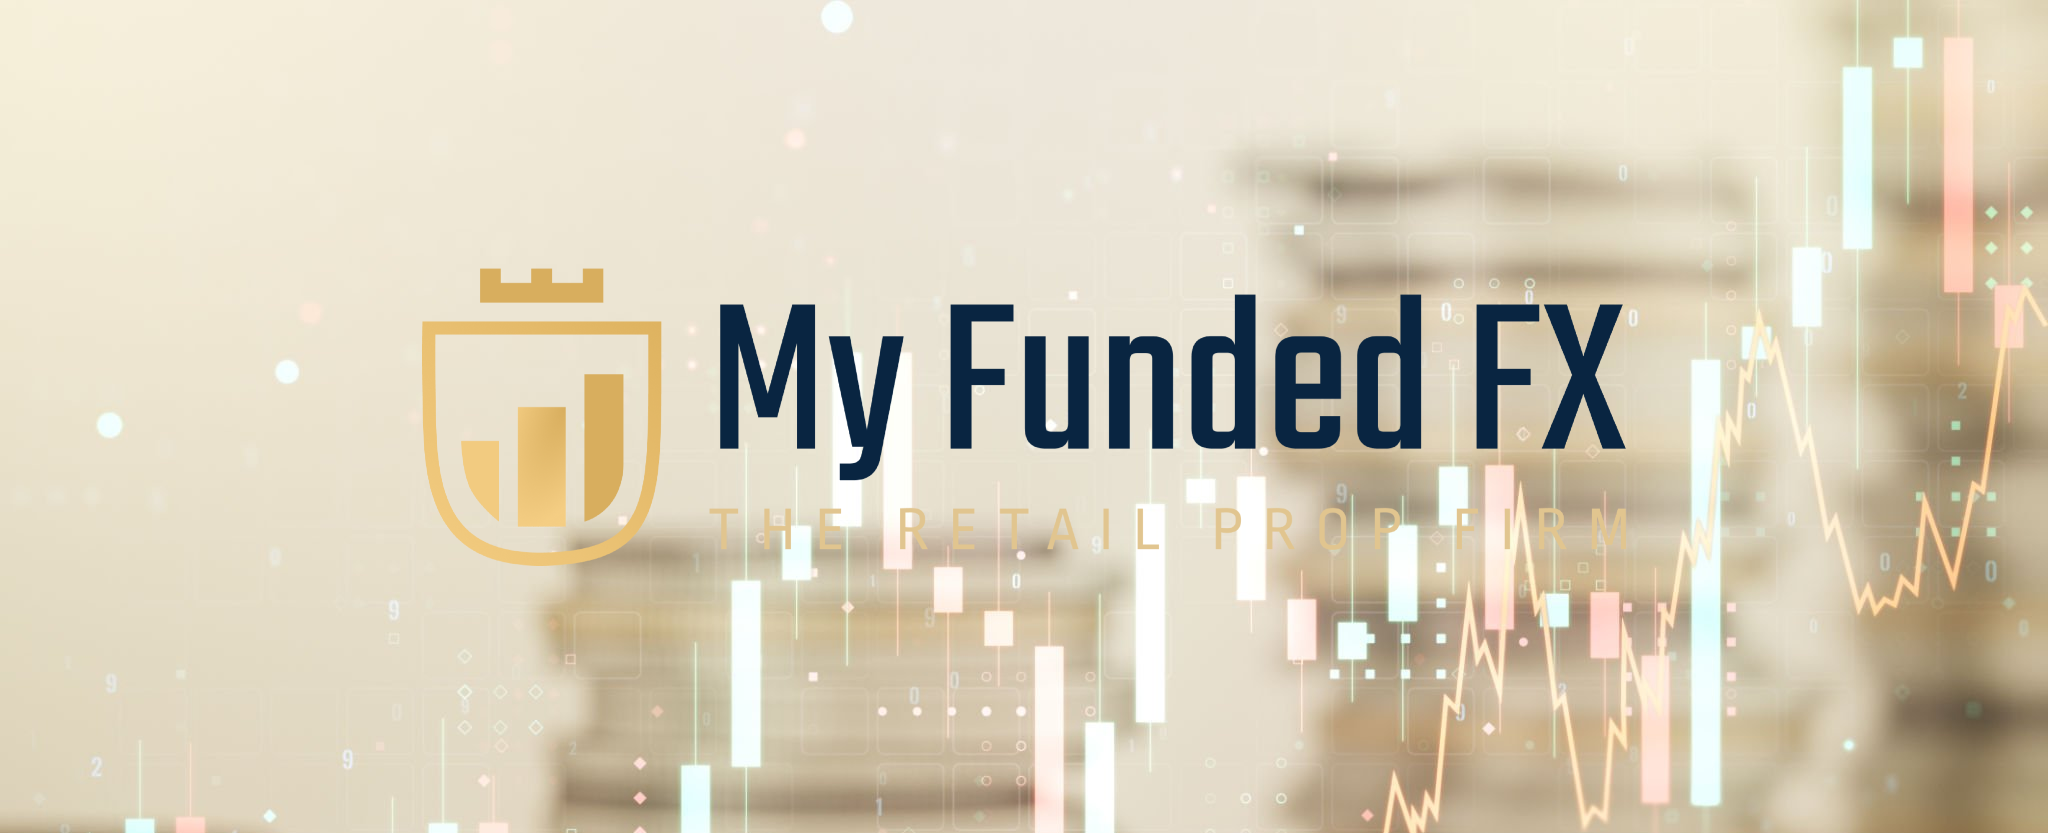 Prop trading firm MyFundedFX goes live on cTrader platform after being forced to ditch MT4/MT5 over regulatory concerns.